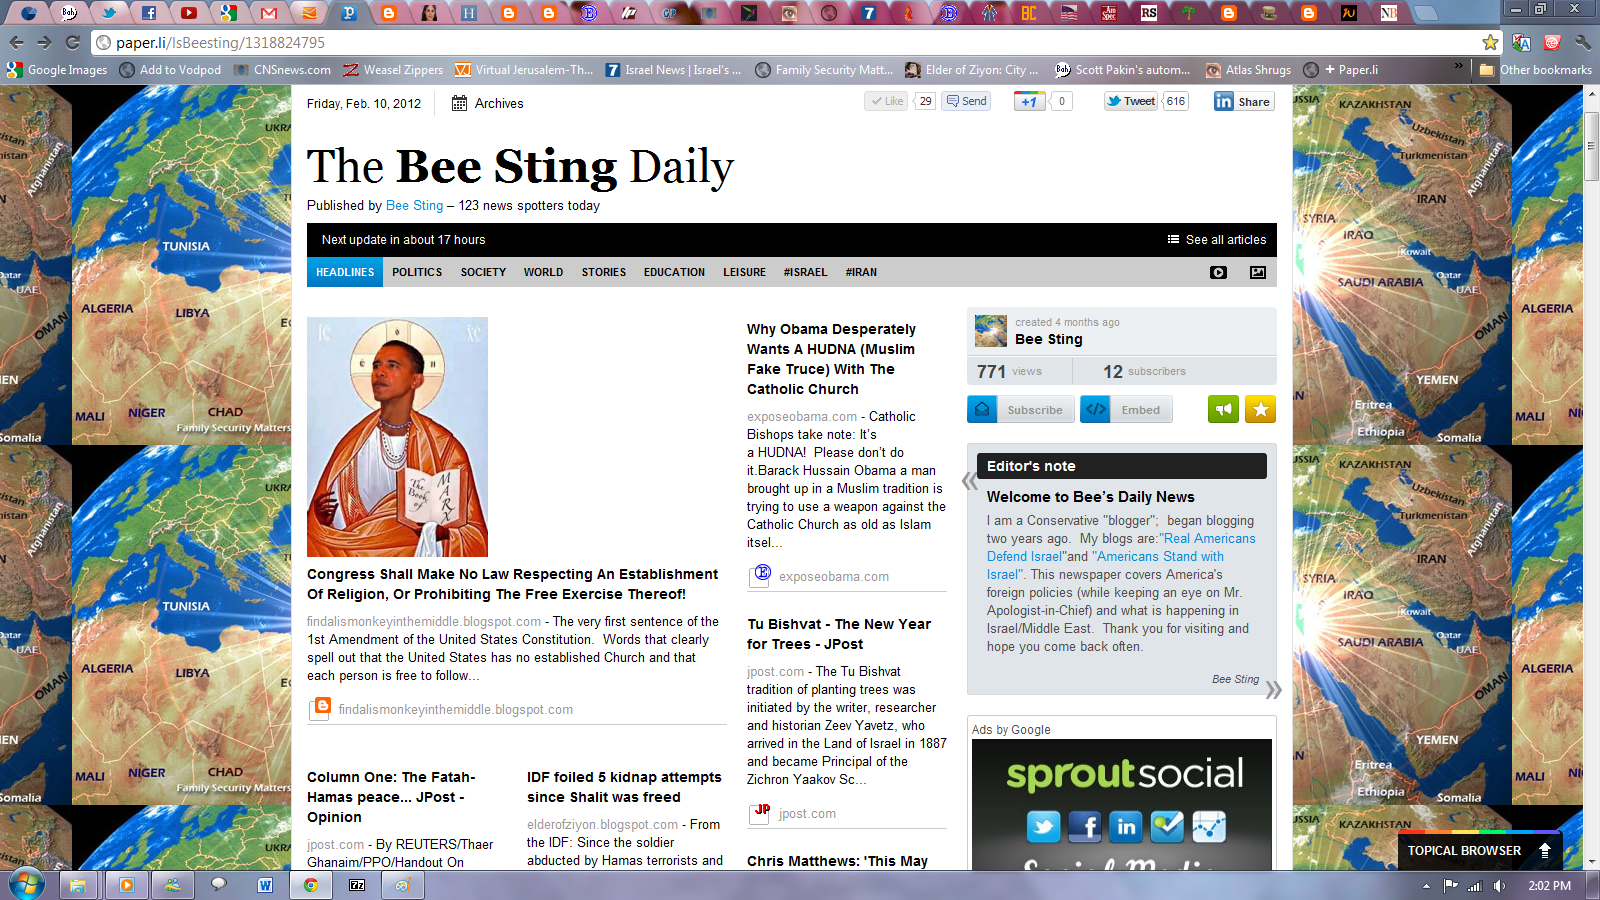 http://1.bp.blogspot.com/-tg_baUw7u3k/TzVqEK3FCMI/AAAAAAAAD84/_XJOQS6IXi0/s1600/The+Bee+Sting+Daily+news.png